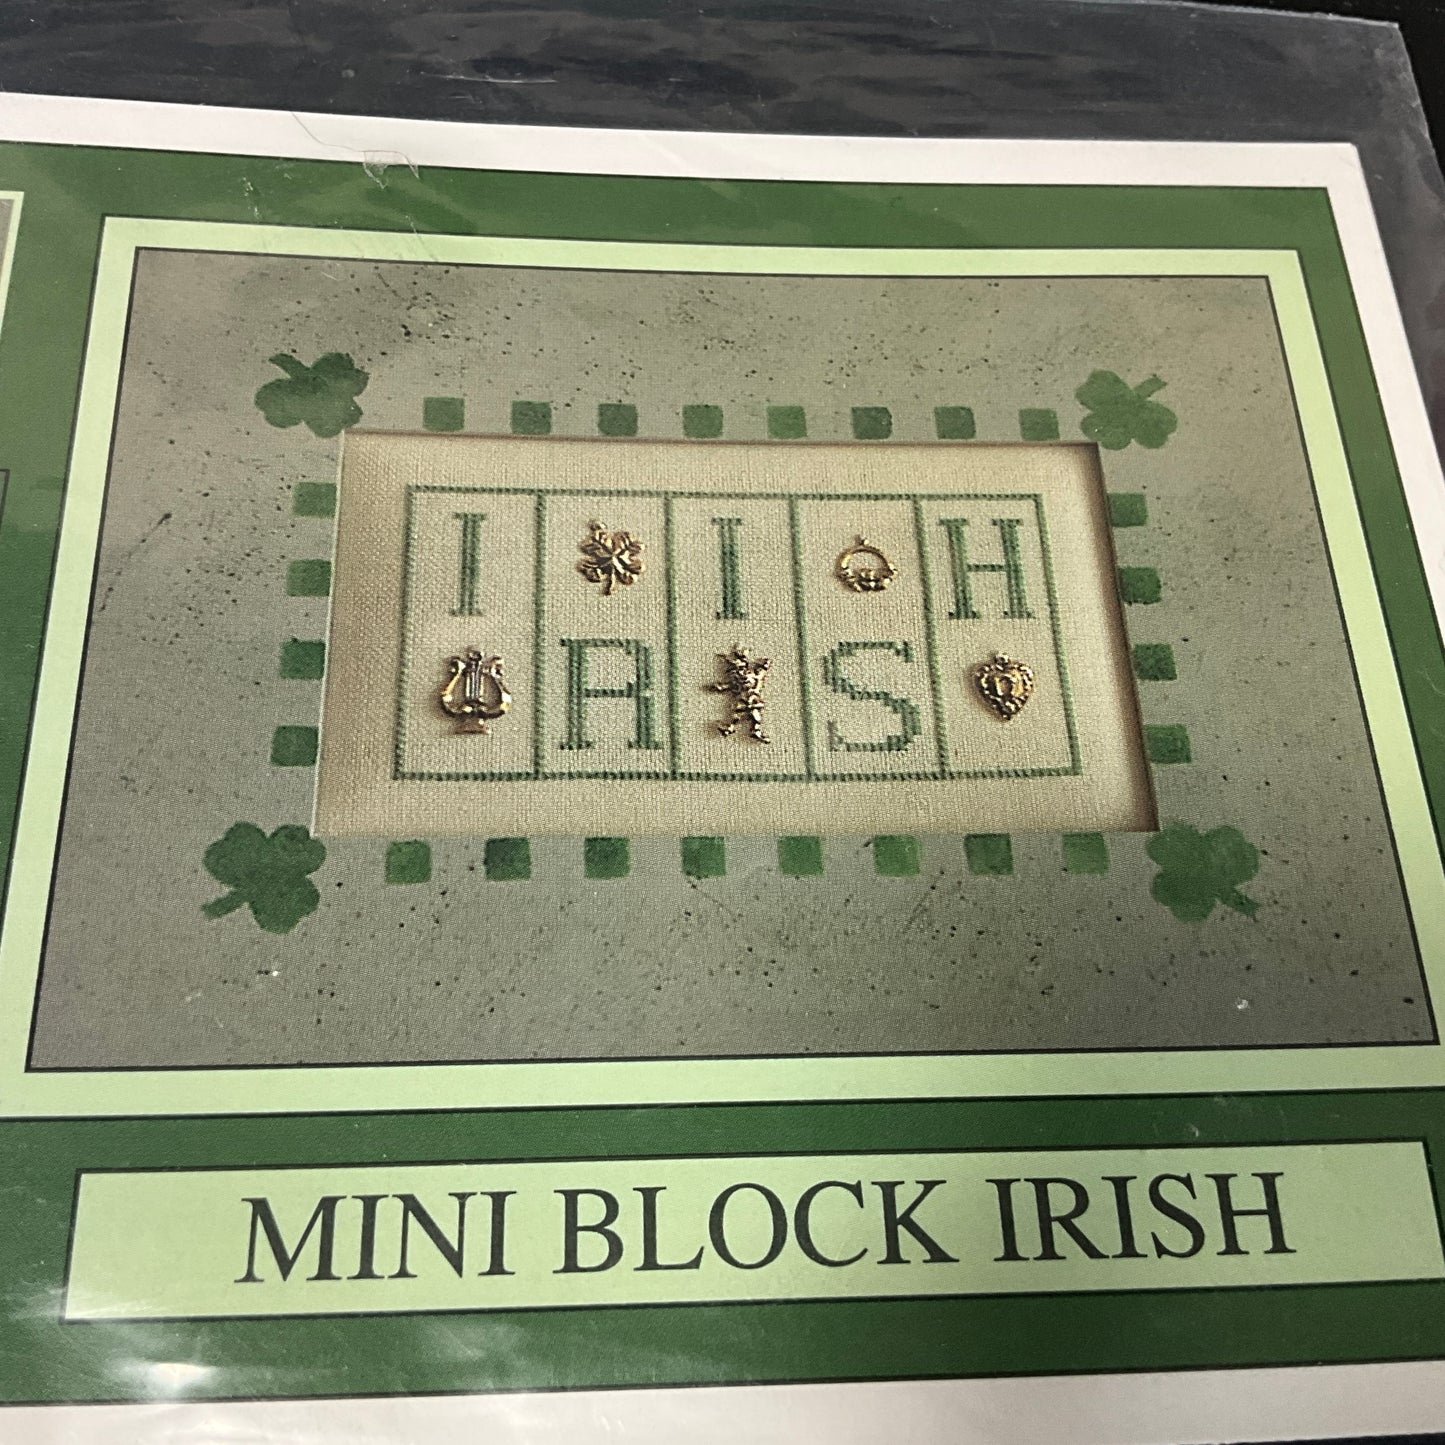 Hinzeit Block Irish needlecraft chart with embellishments